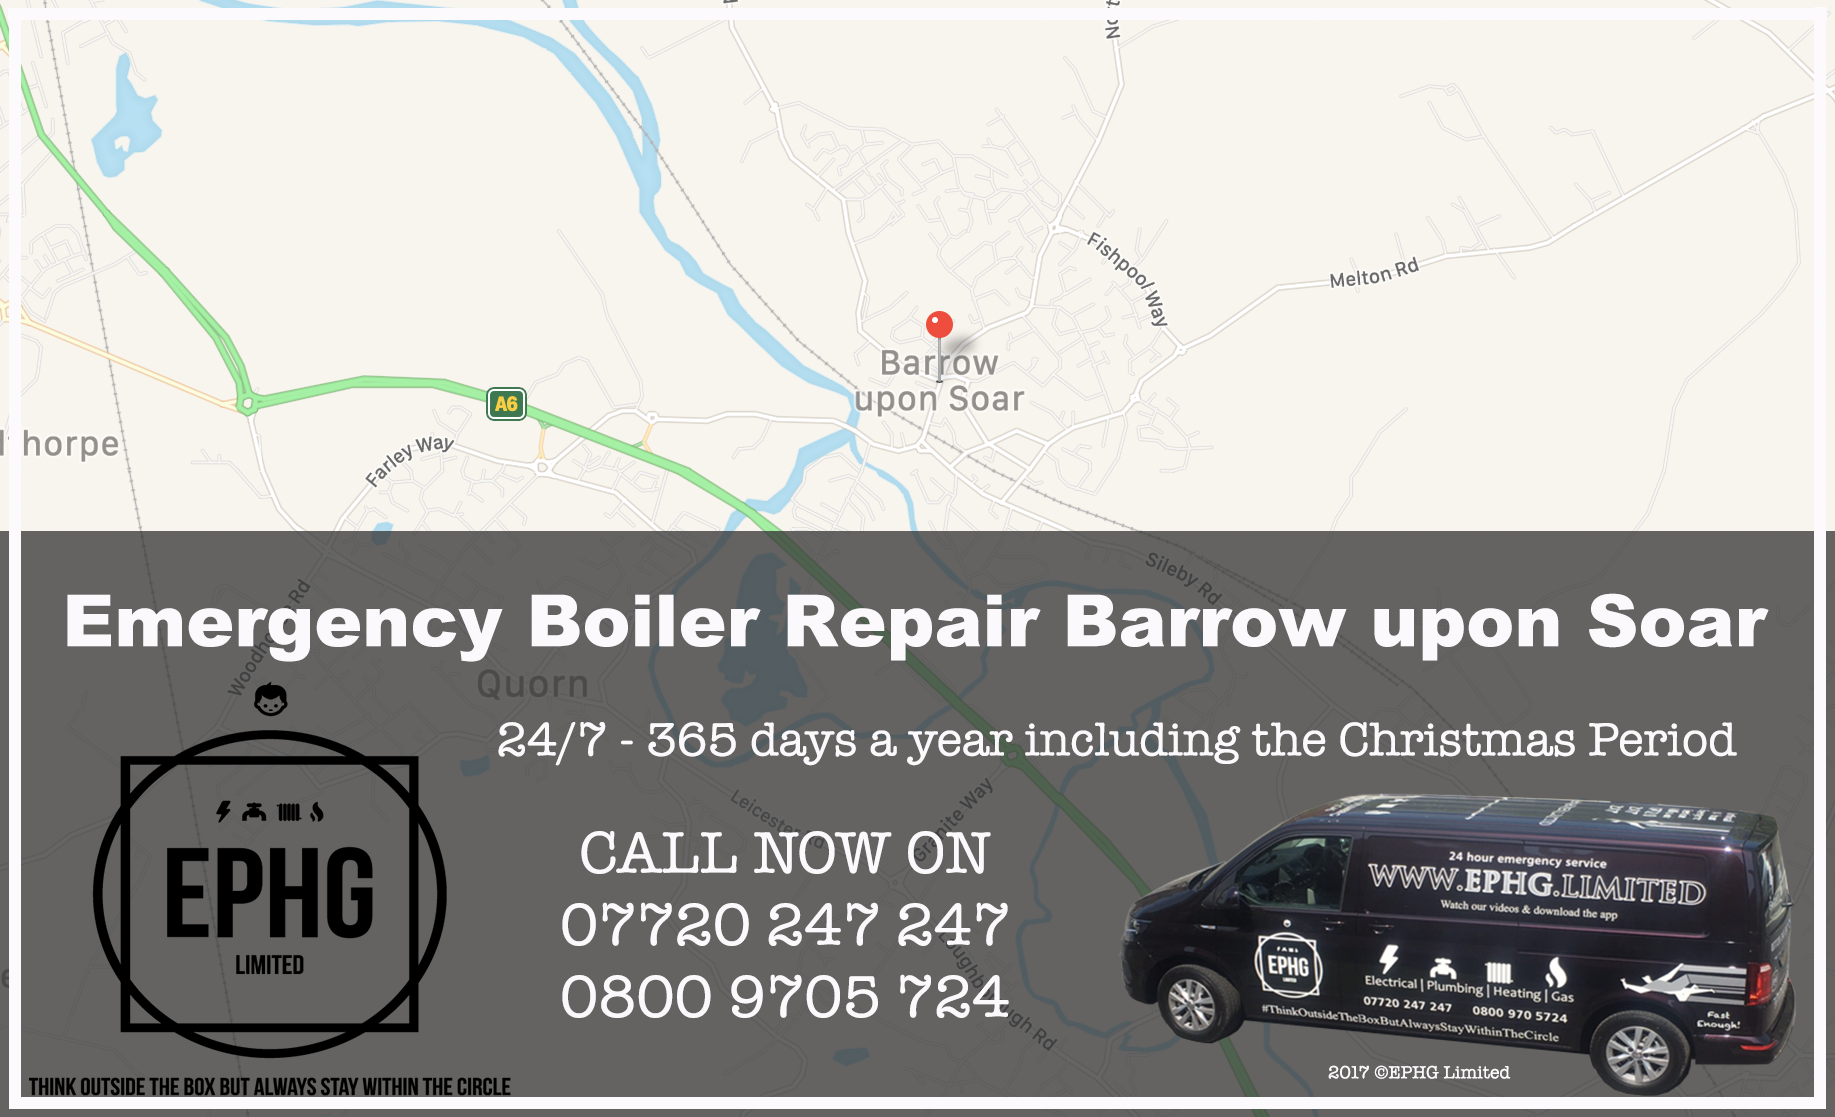 24 Hour Emergency Boiler Repair Barrow upon Soar